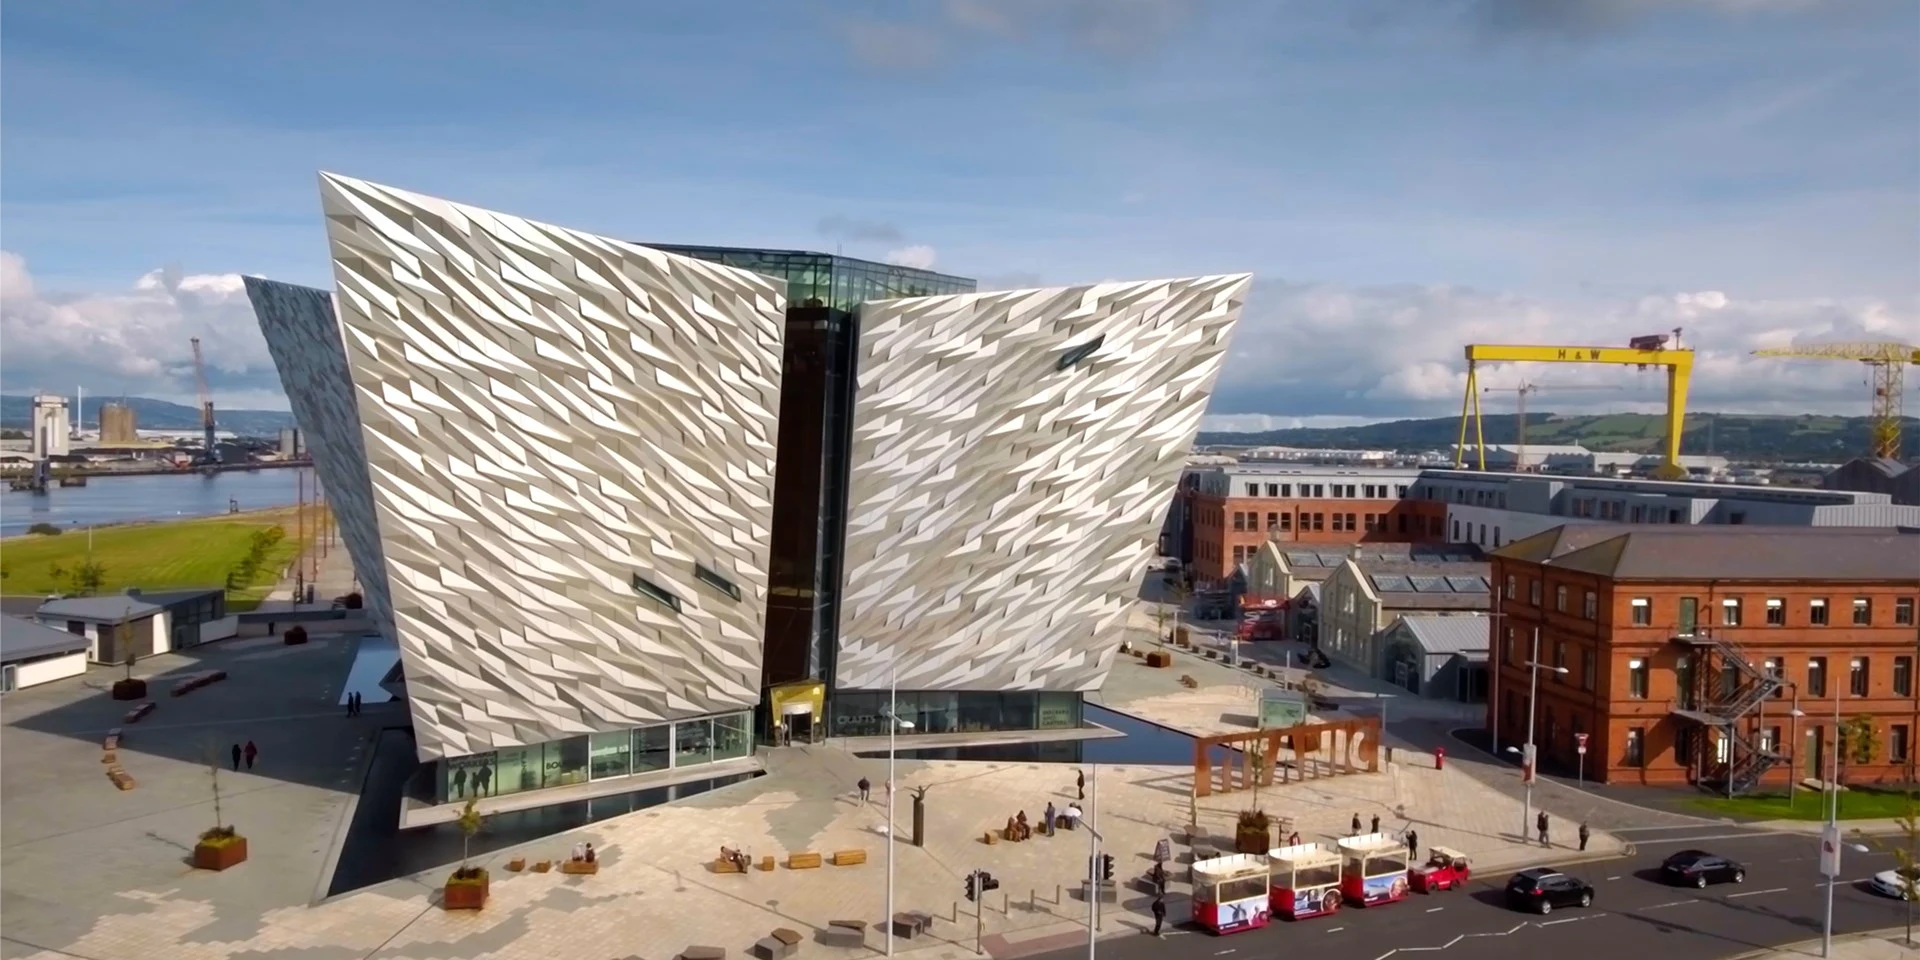 Image of the Titanic Belfast museum